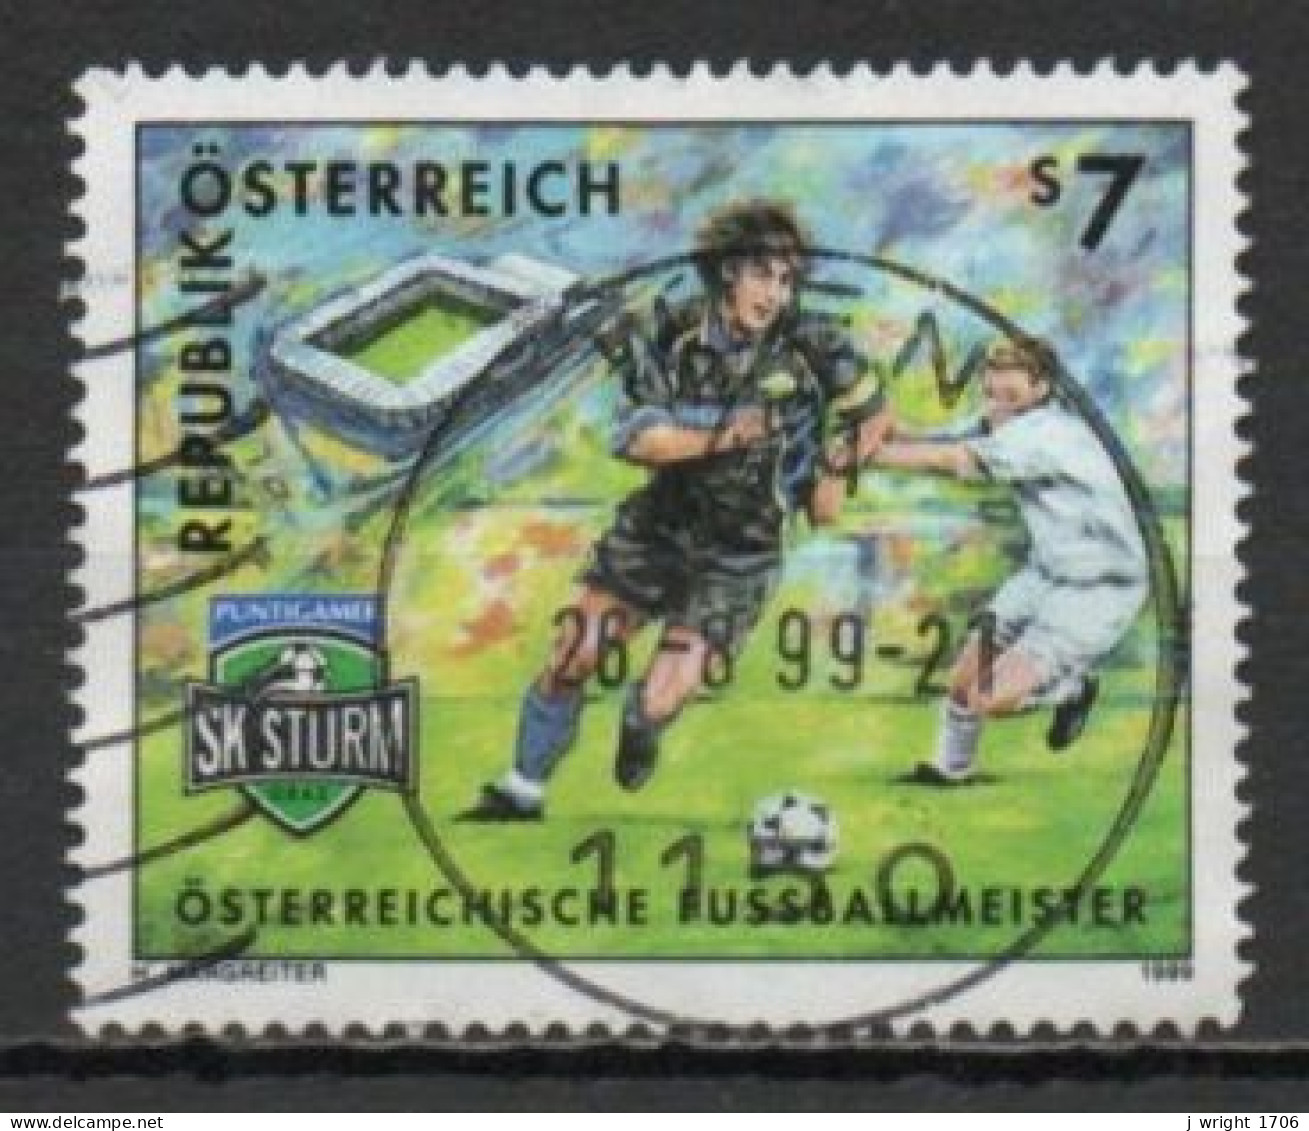 Austria, 1999, SK Puntigamer Sturm Graz Austrian Football Champions, 7s, USED - Usati